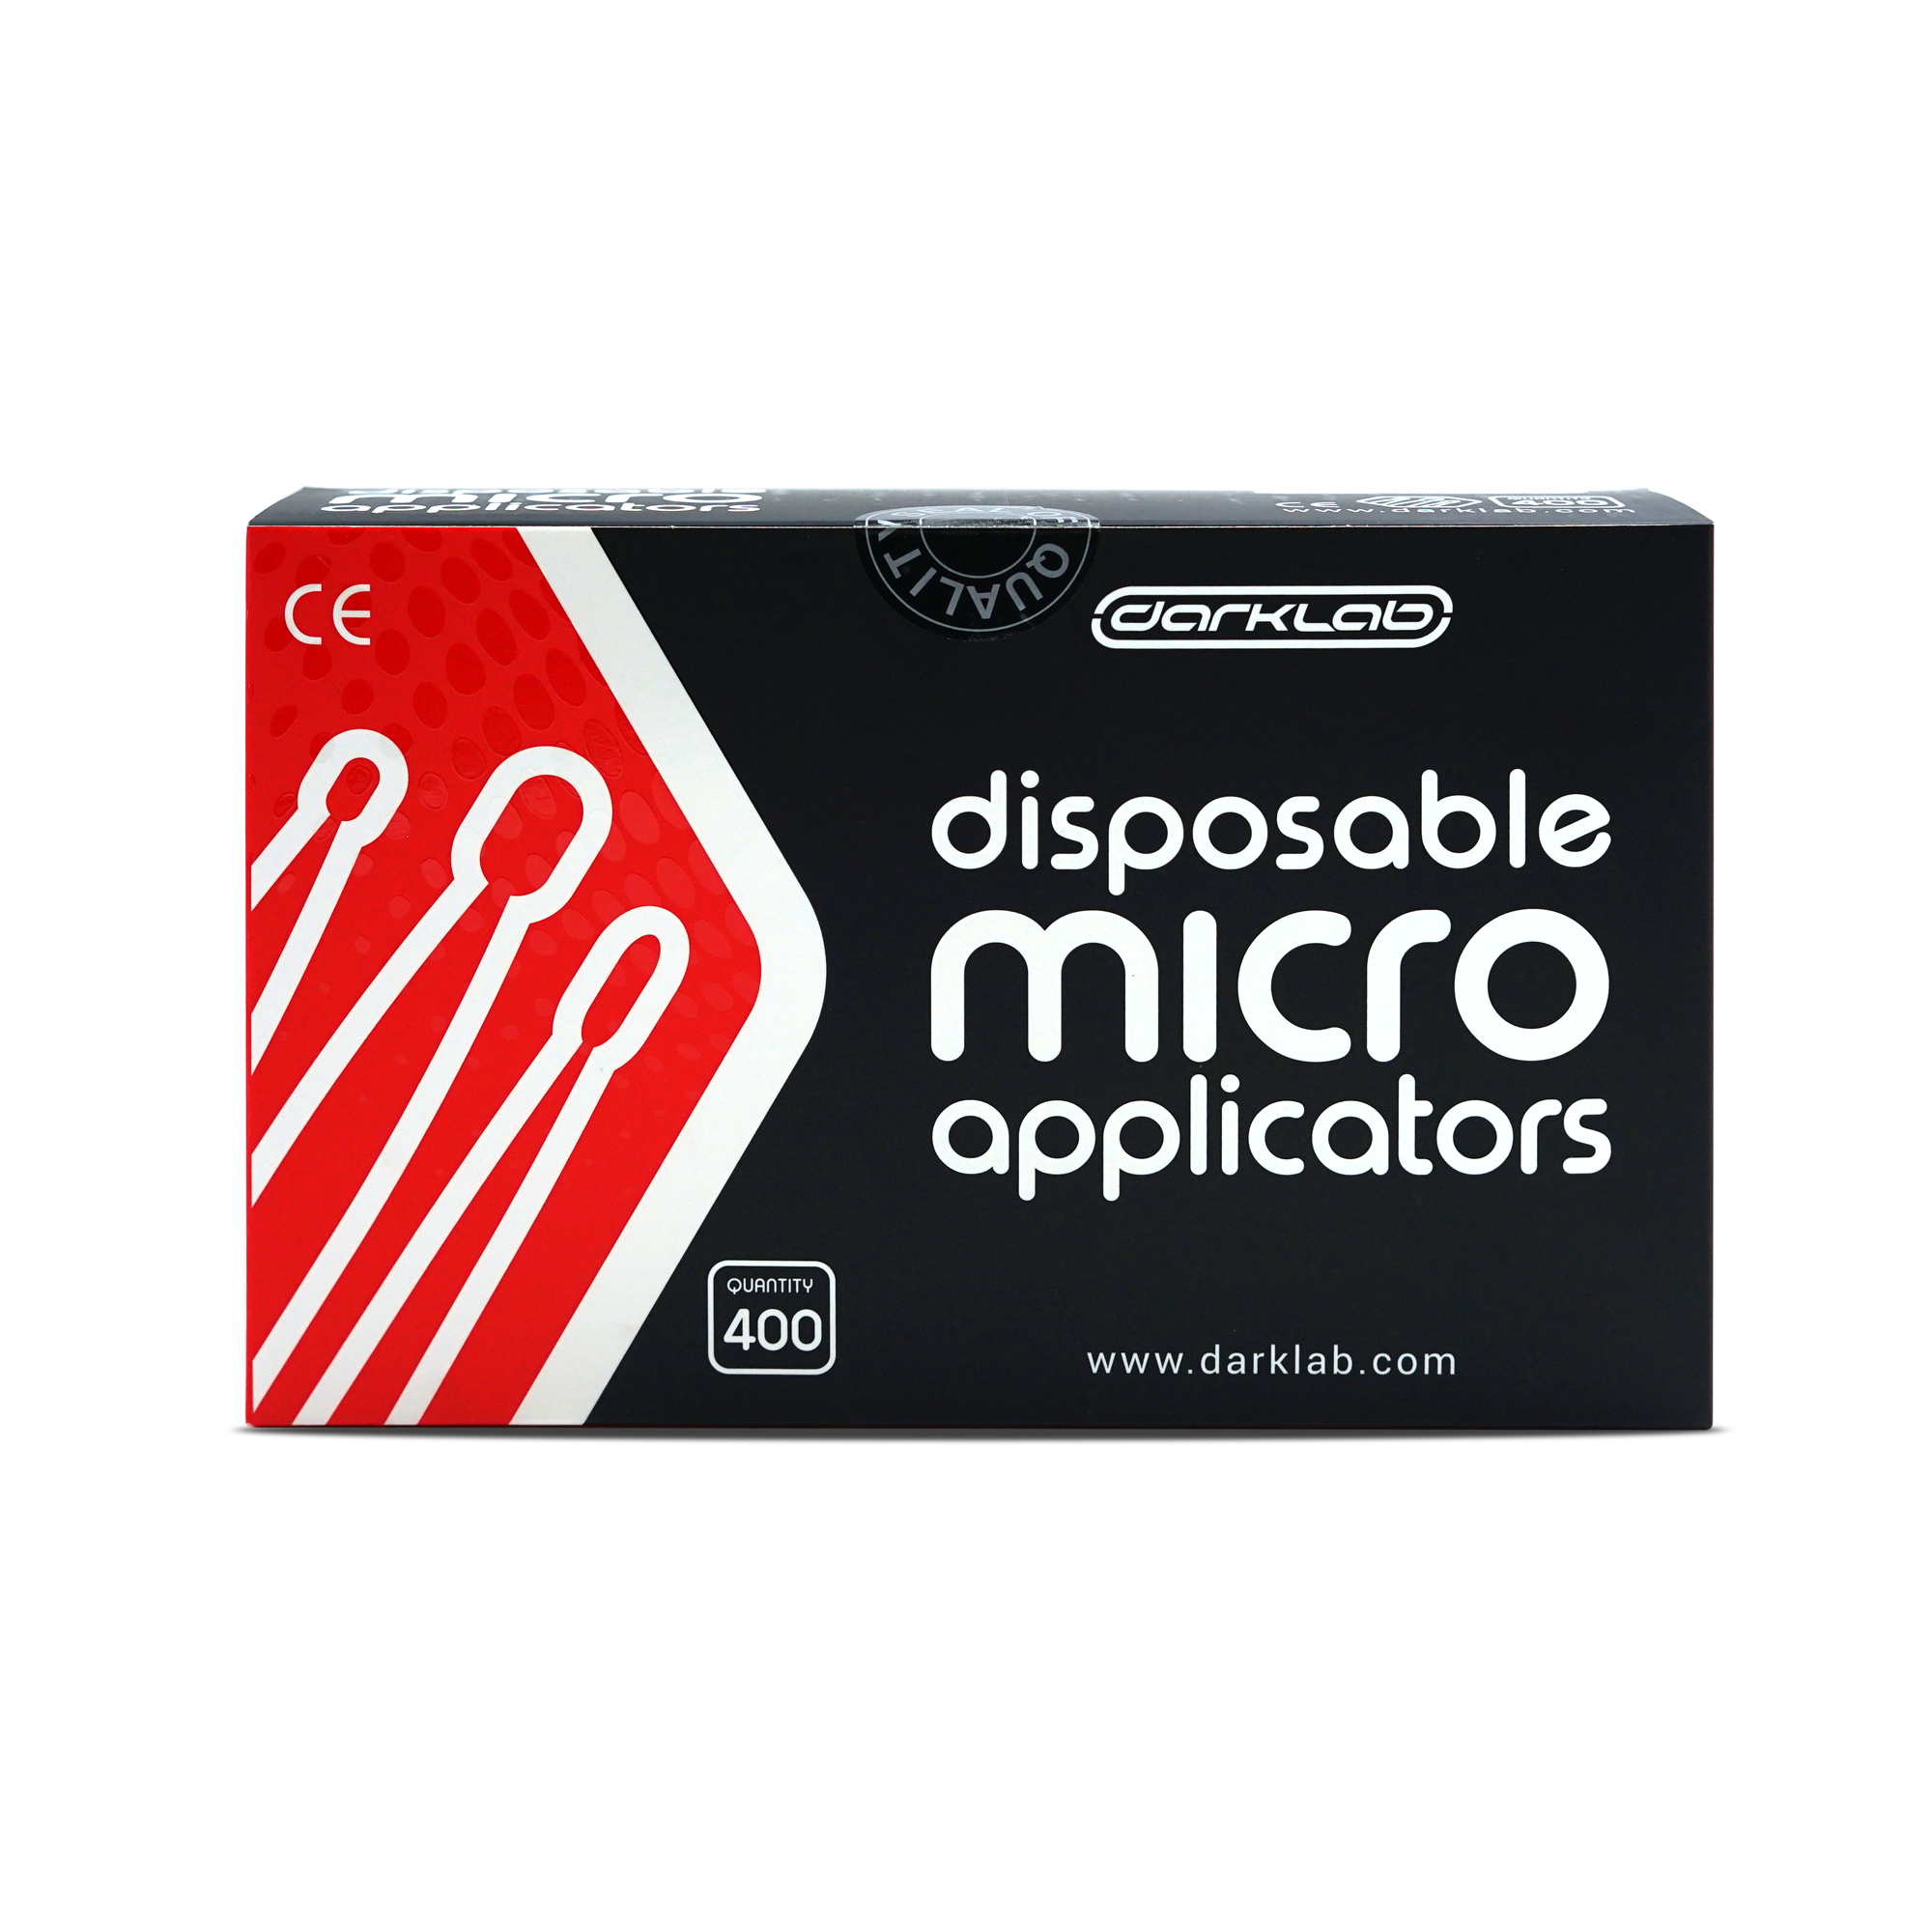 Micro Applicators (400/box)